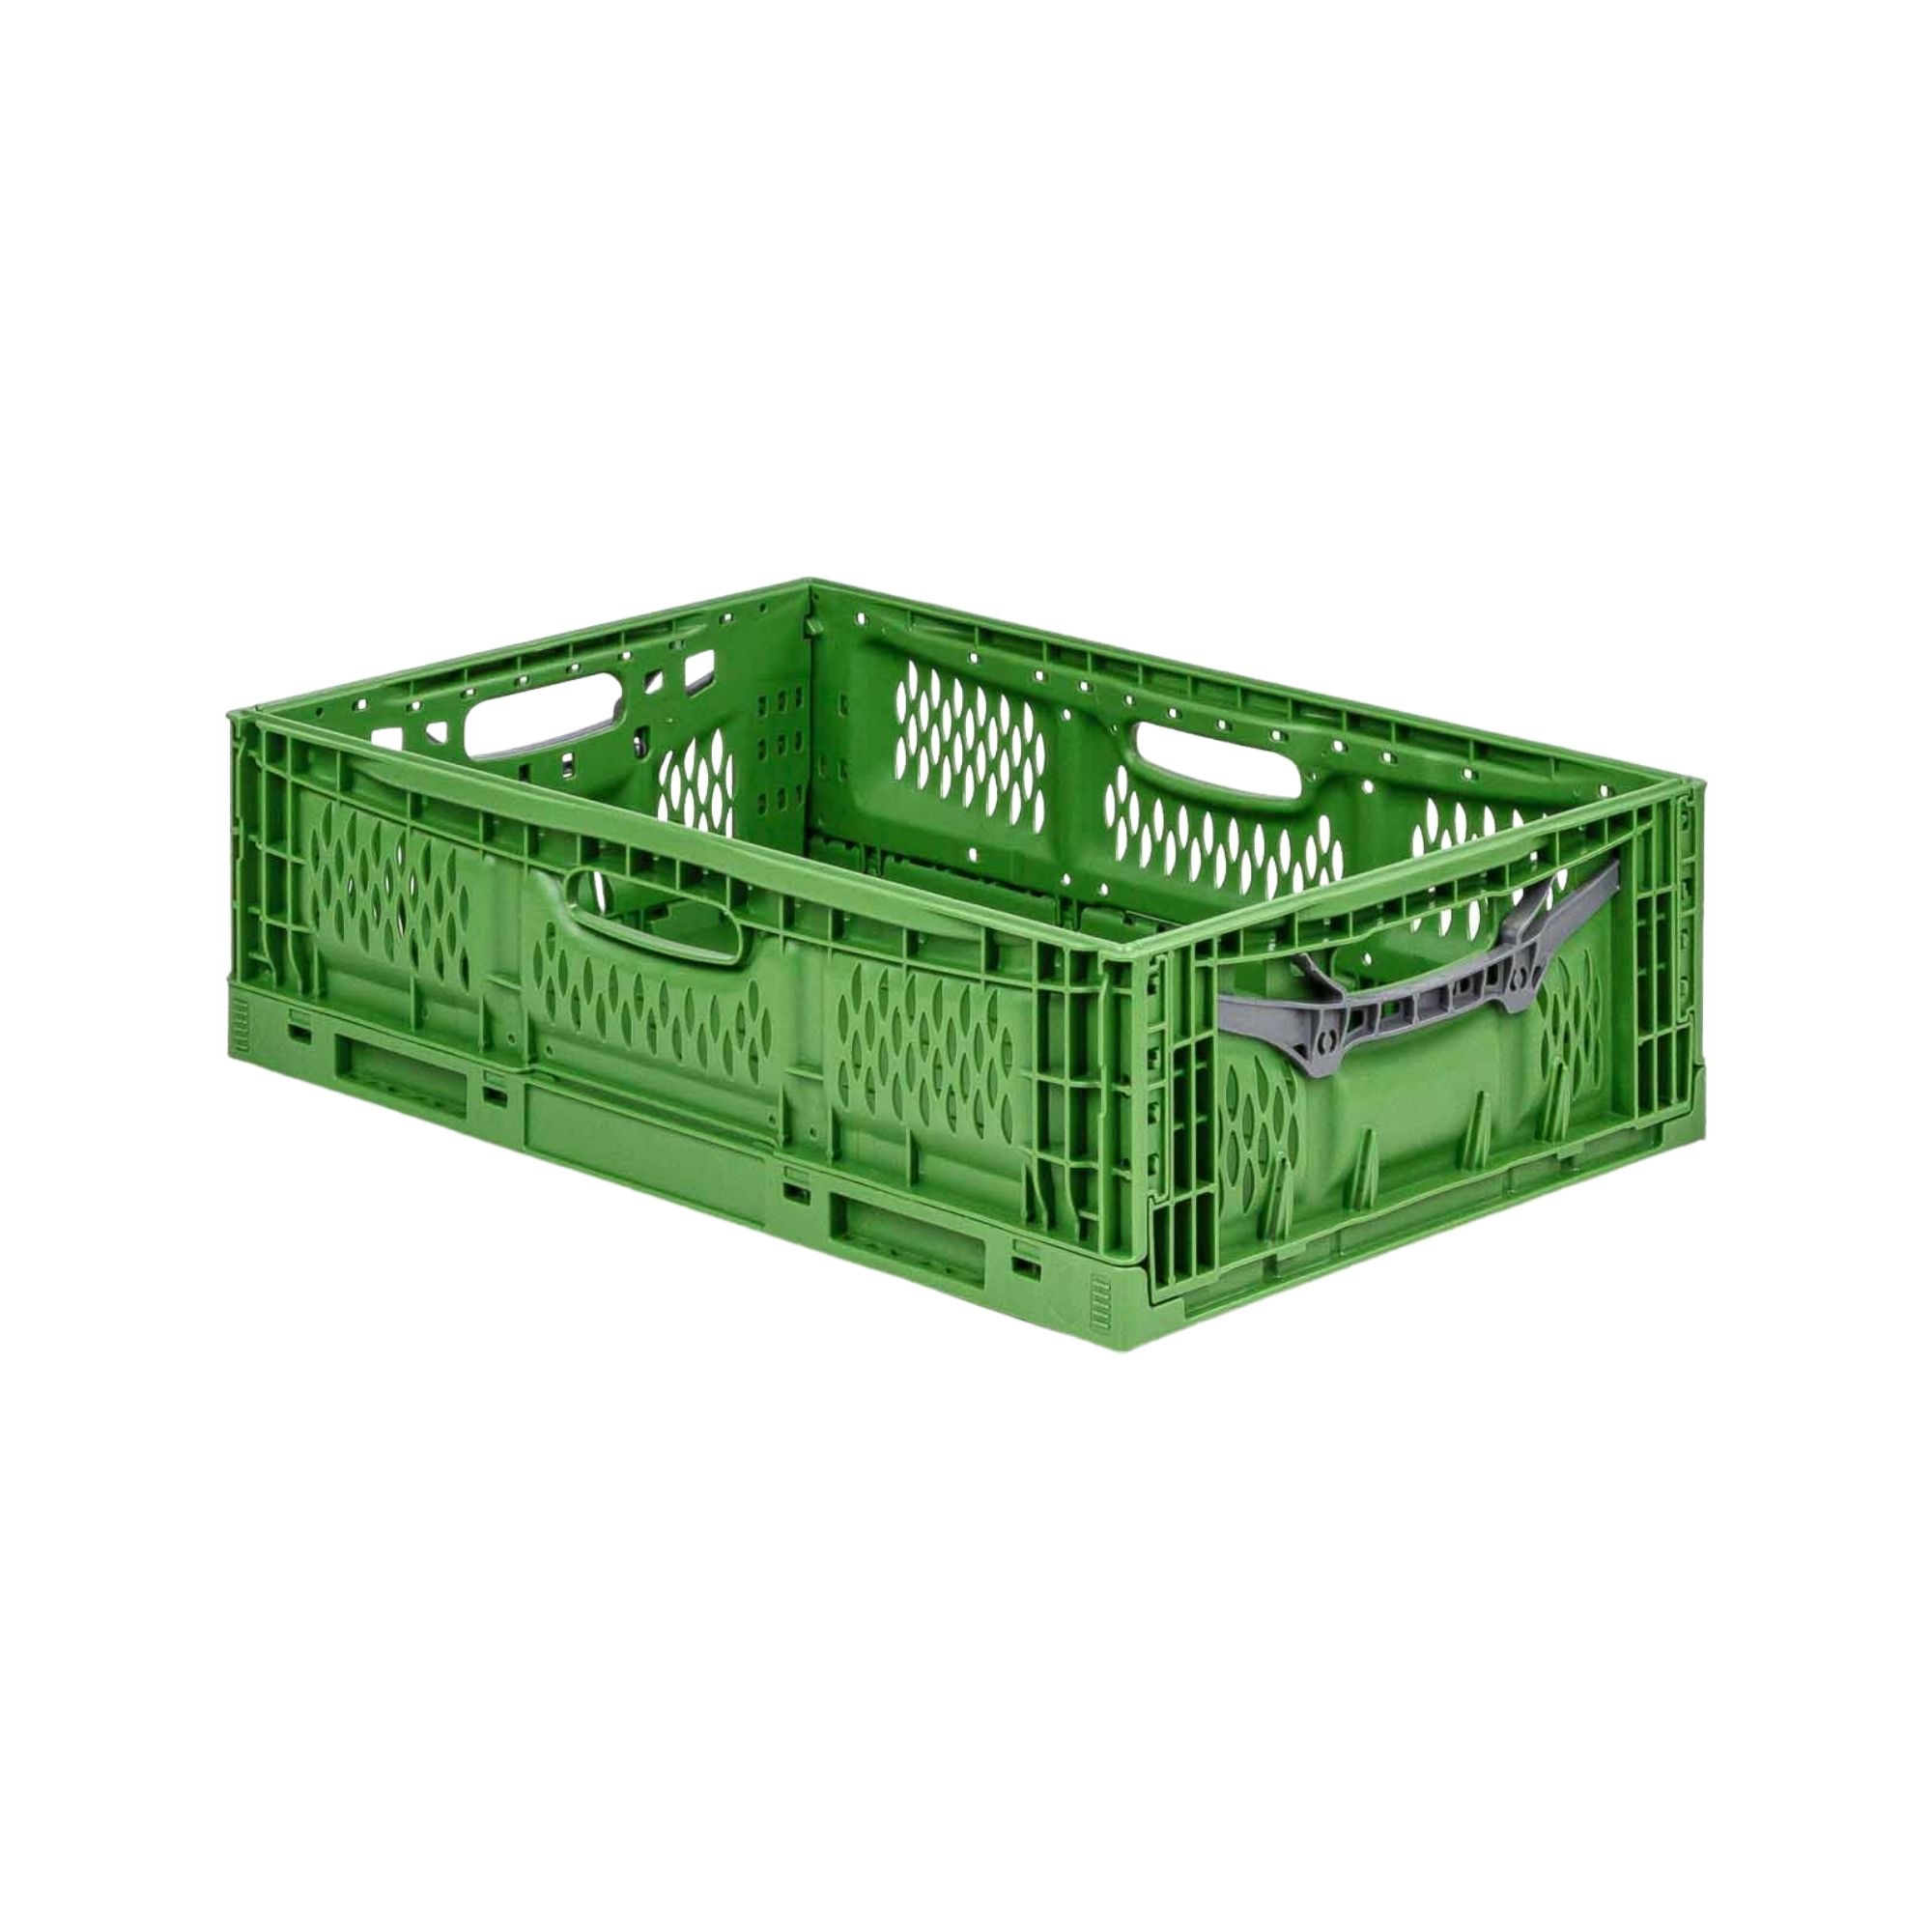 Stabile Profi-Klappbox Chameleon in Industriequalität | HxBxT 18x40x60cm | 35 Liter | klappbar stapelbar durchbrochen lebensmittelecht | Eurobox Eurobehälter Transportbehälter Stapelbehlter Faltbox